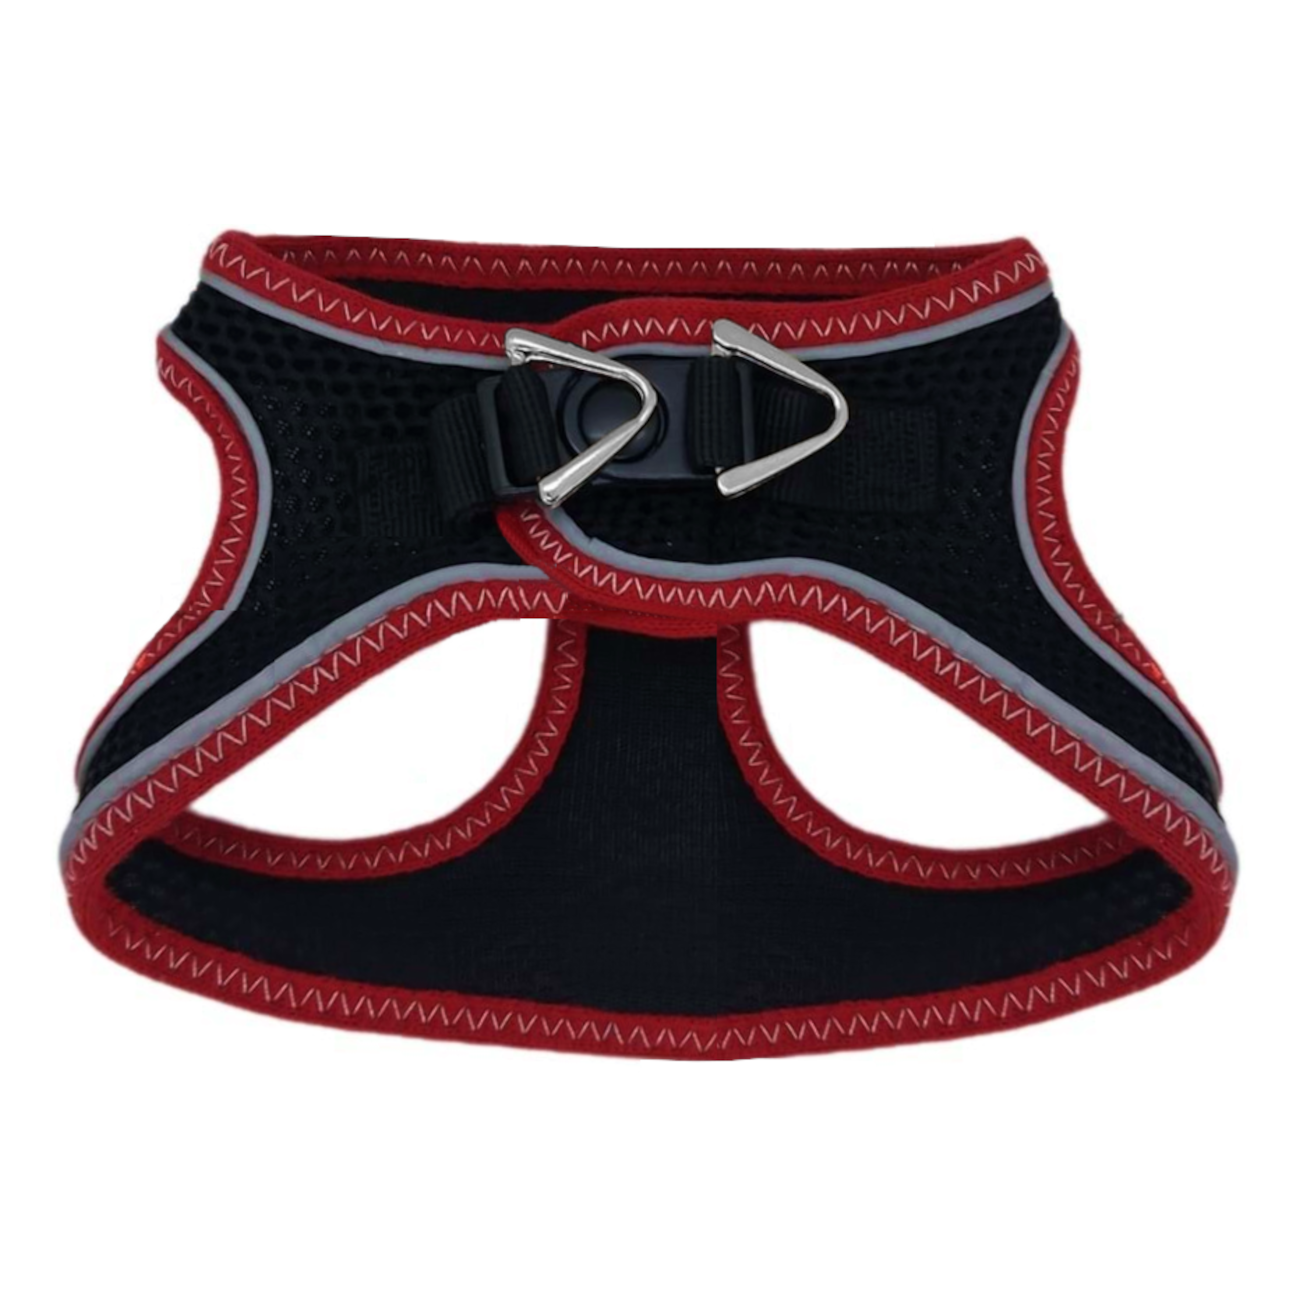 CLZ205 Üç Kilitli Sportif Kedi Köpek Göğüs Tasması 32-40 cm Medium Kırmızı-Siyah